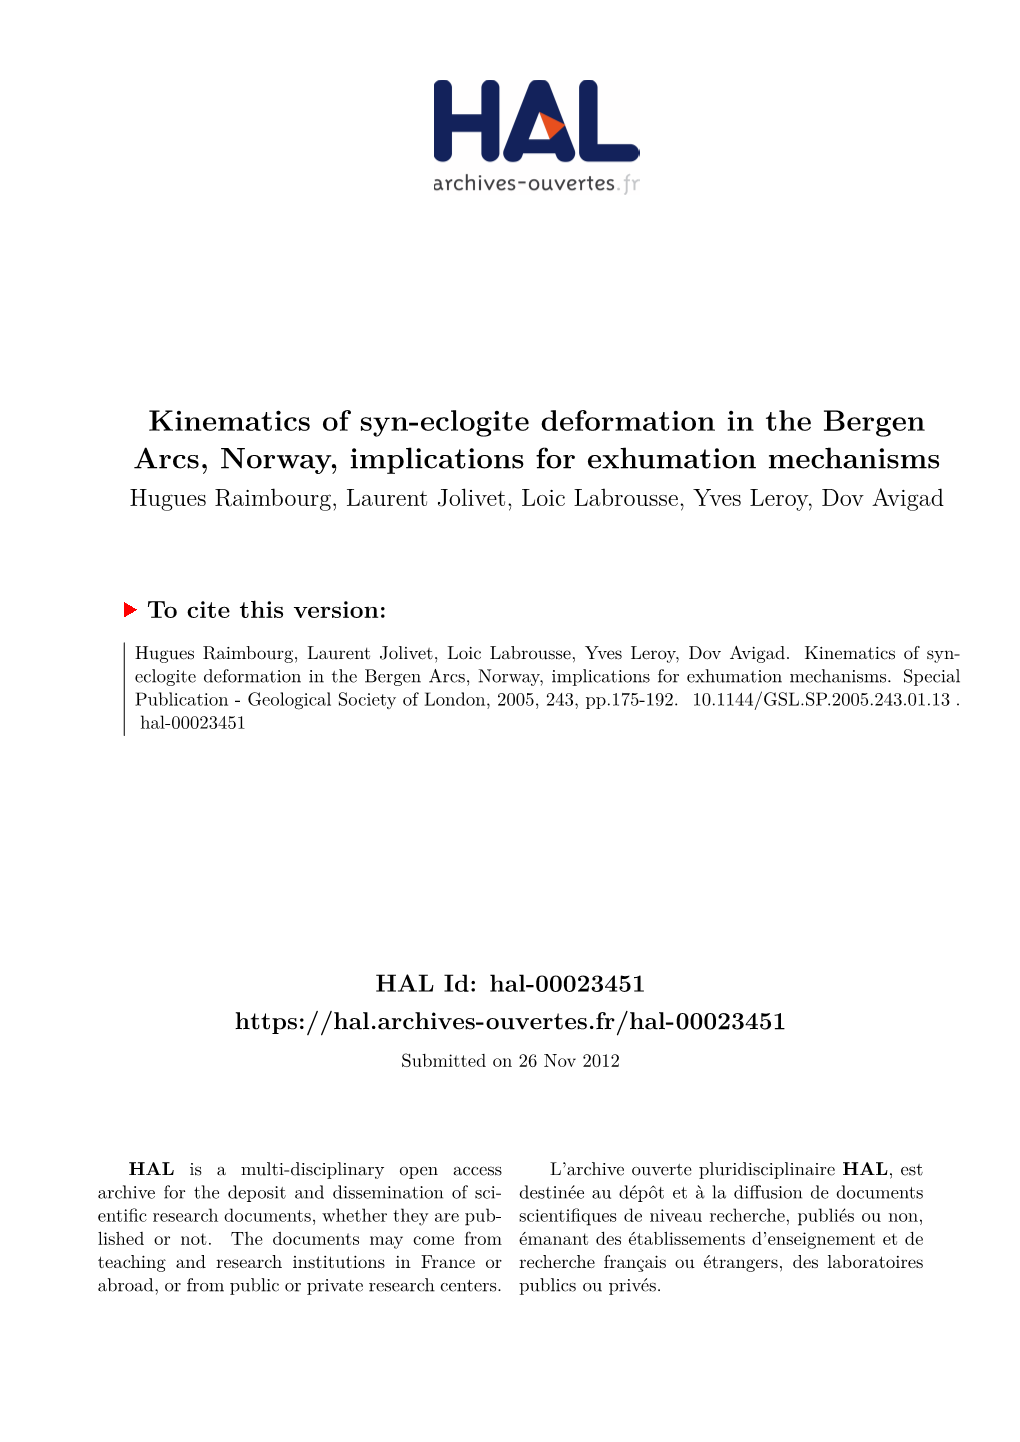 Kinematics of Syn-Eclogite Deformation in the Bergen Arcs